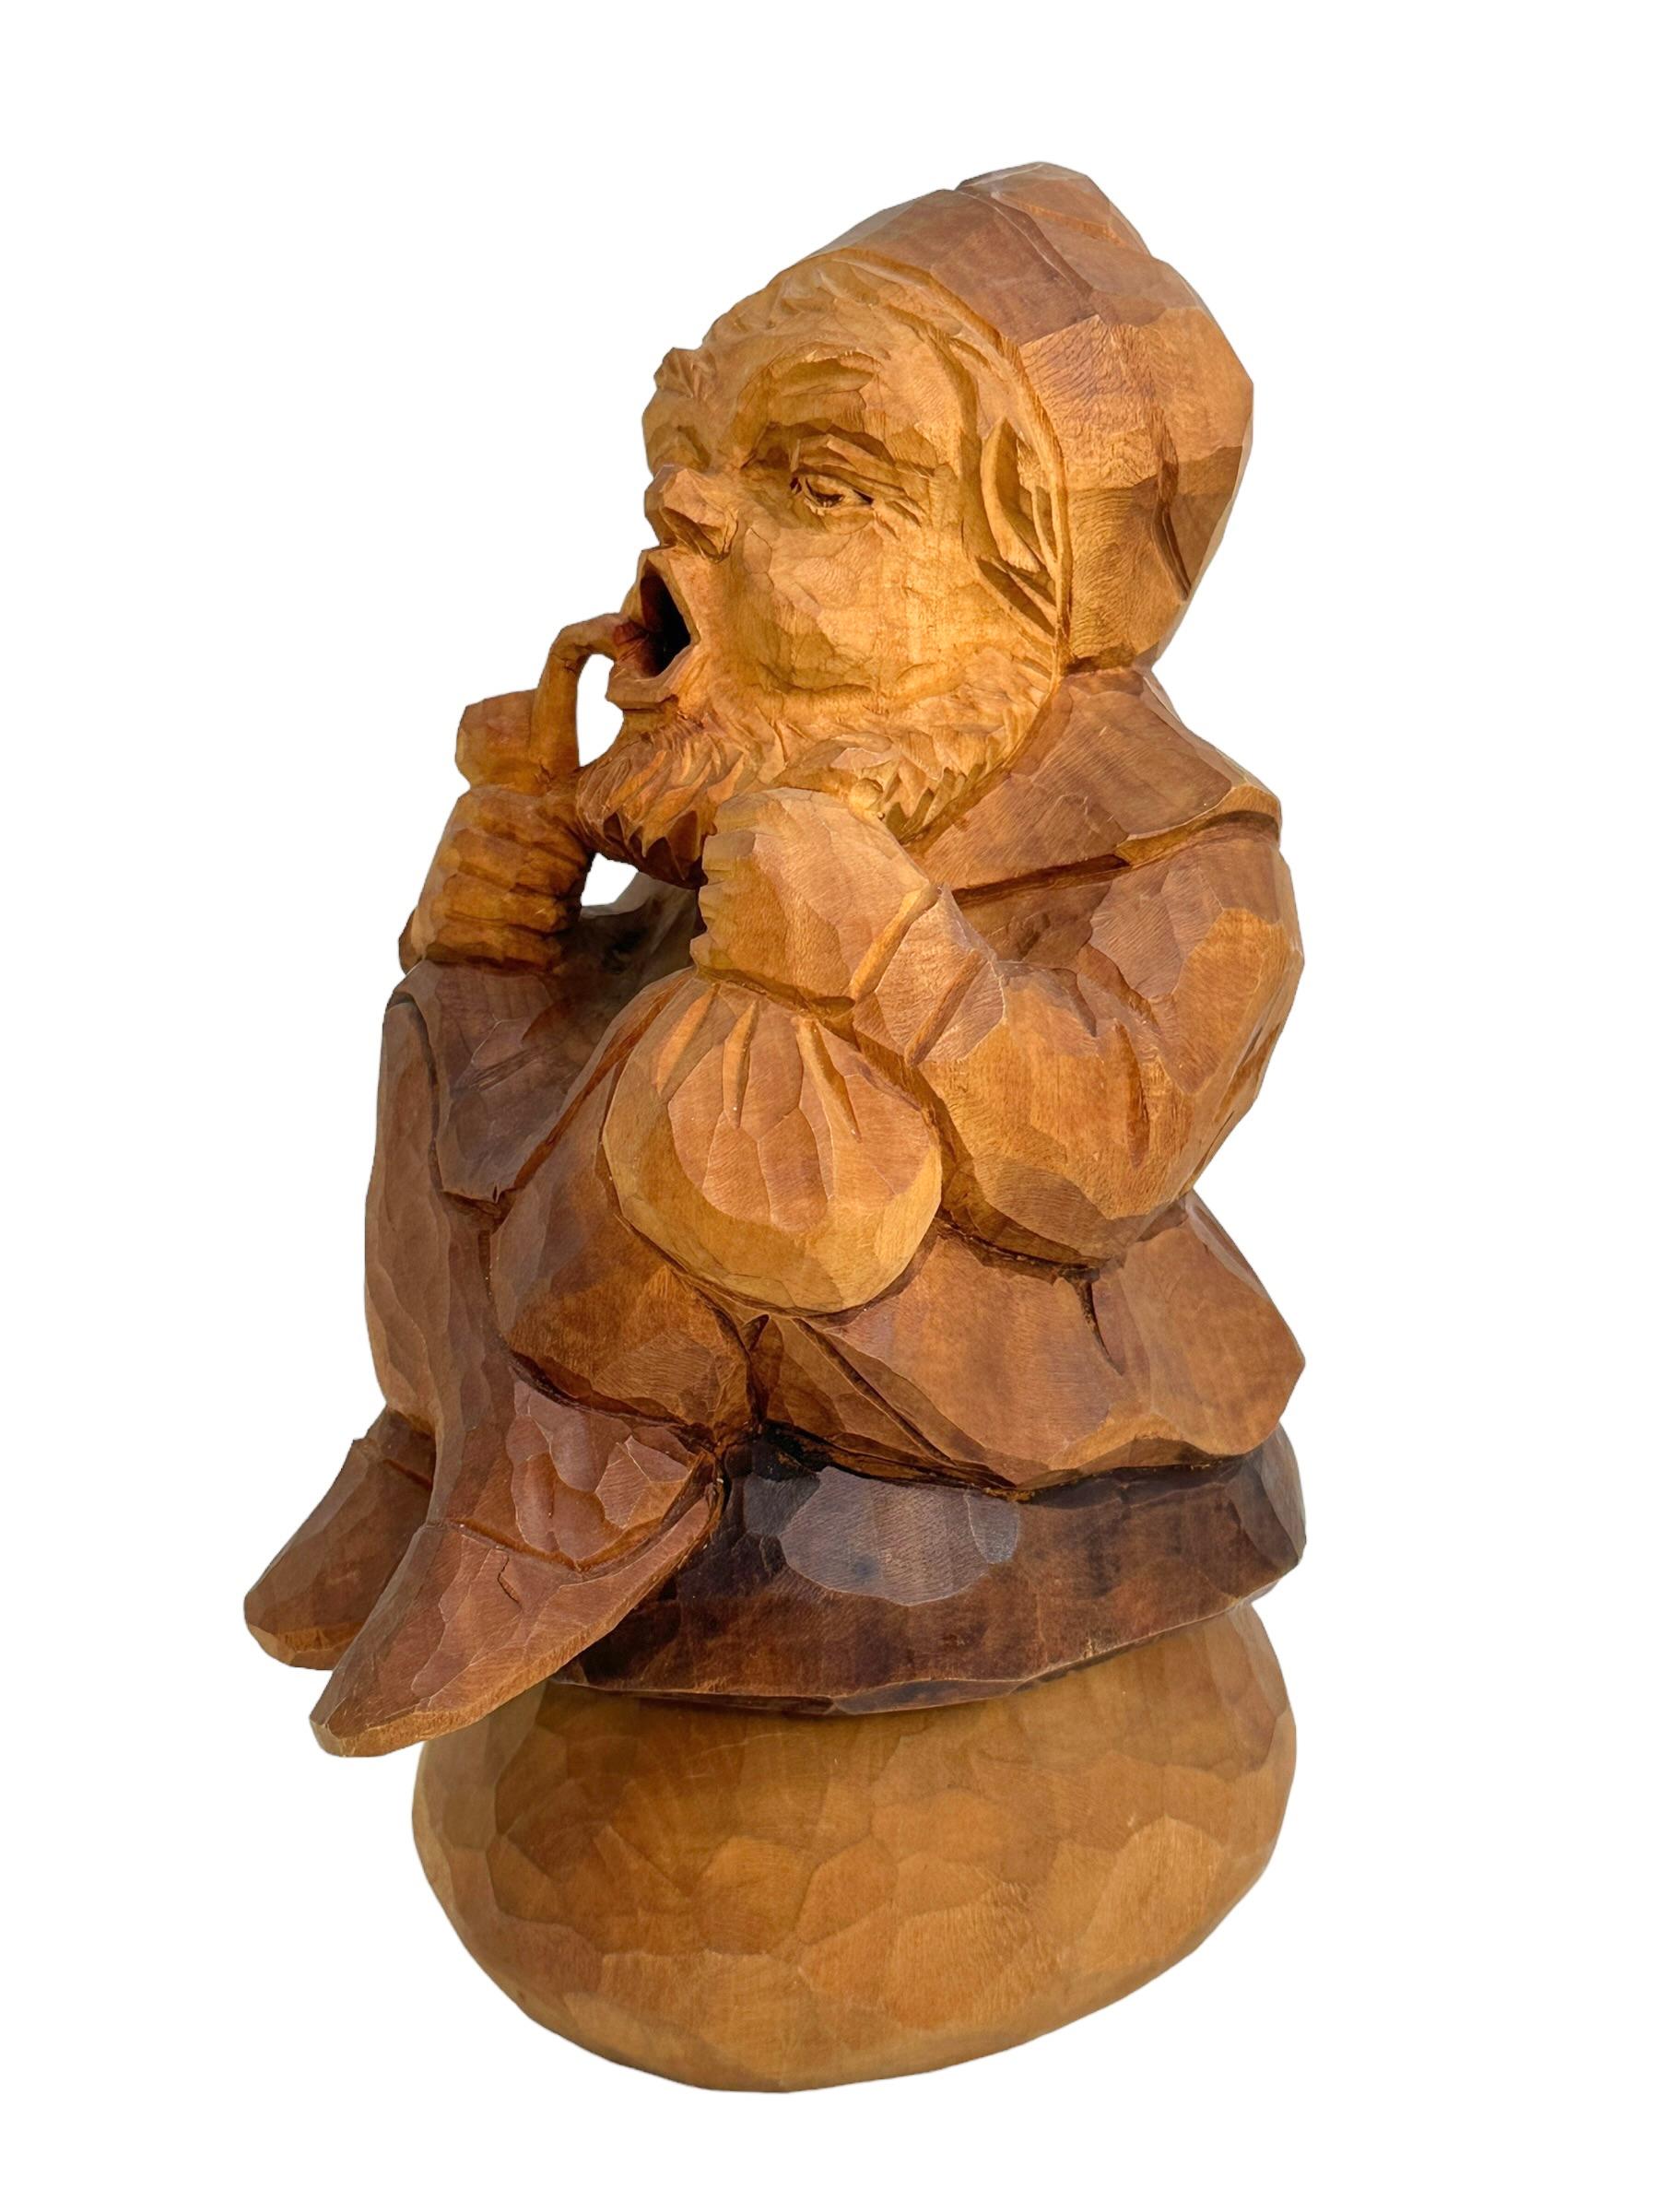 Hand Carved Wooden Smoker Gnome Figure, Vintage German Black Forest Folk Art  In Good Condition For Sale In Nuernberg, DE